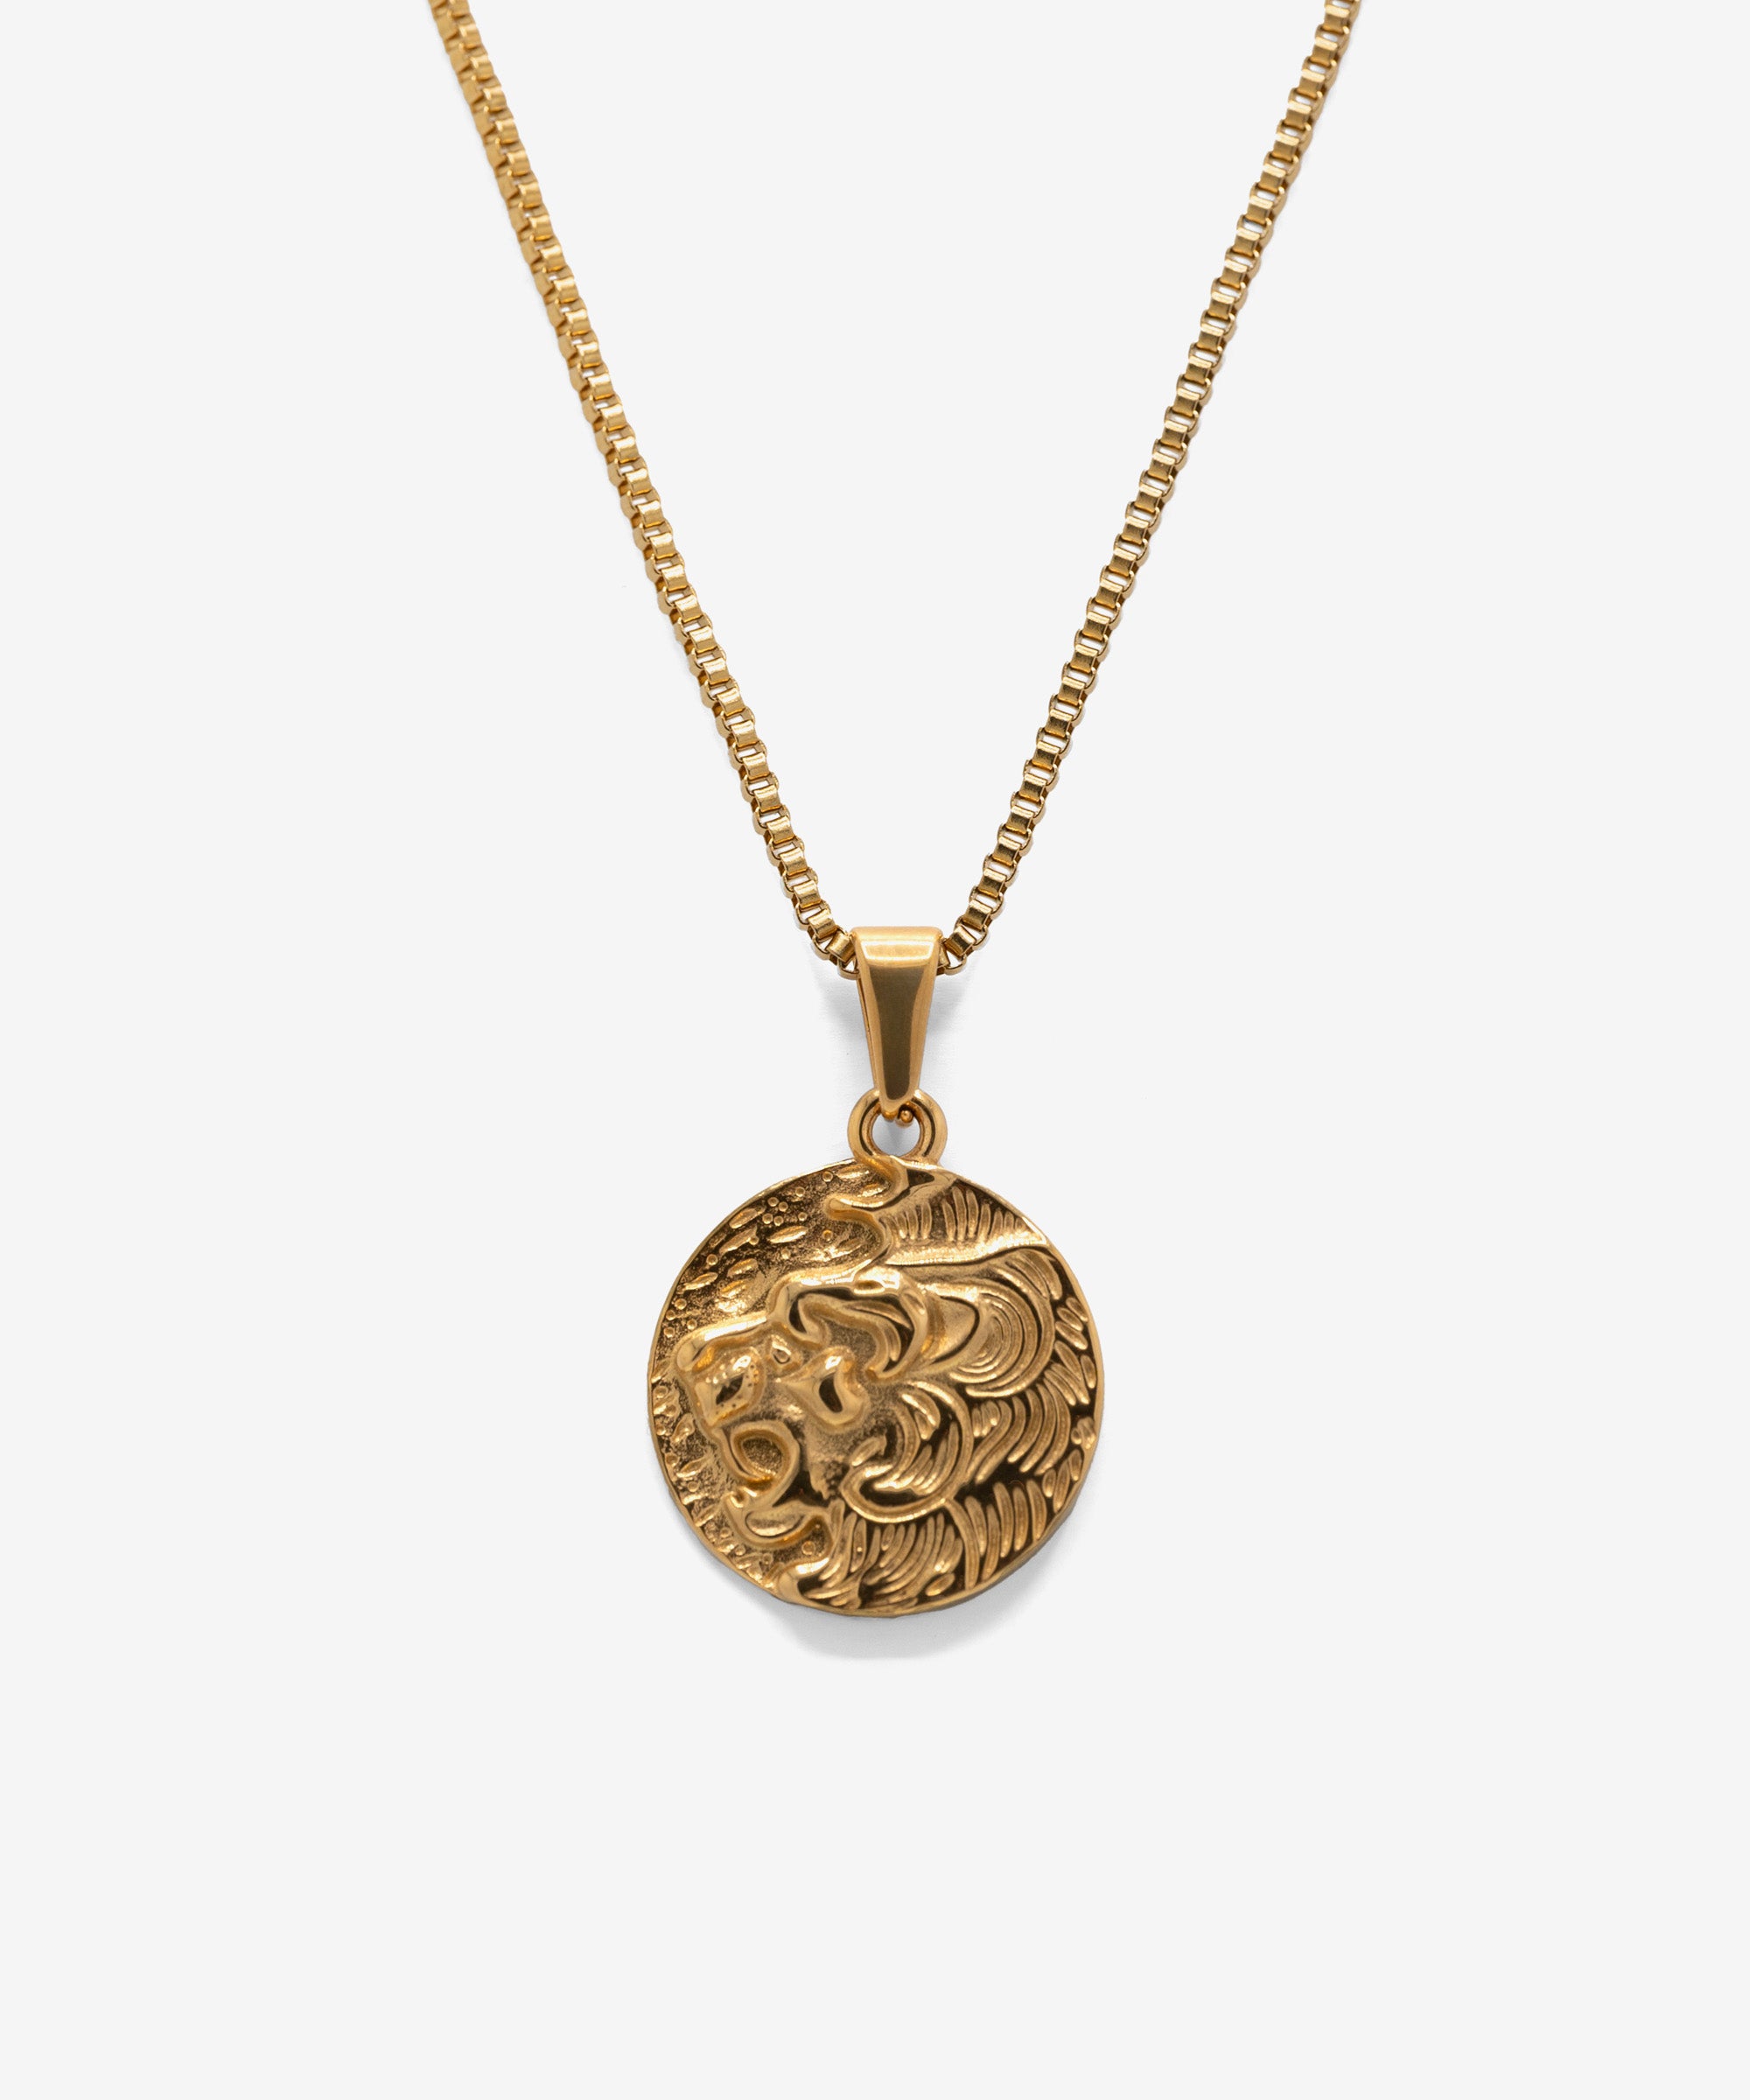 925 Sterling Silver Lion of Judah Roman Glass Pendant Necklace | eBay